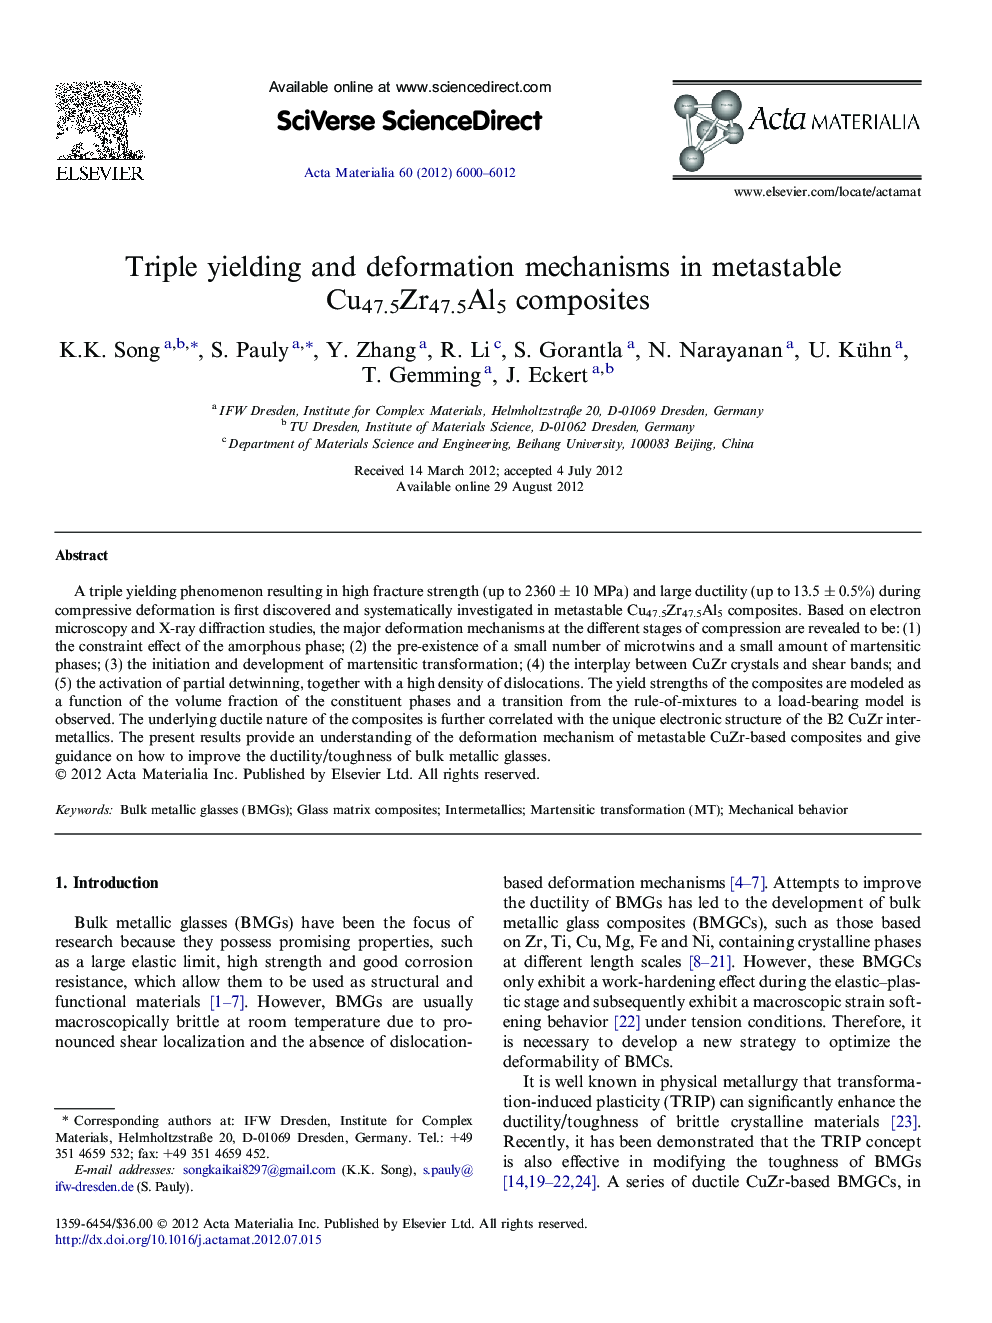 Triple yielding and deformation mechanisms in metastable Cu47.5Zr47.5Al5 composites